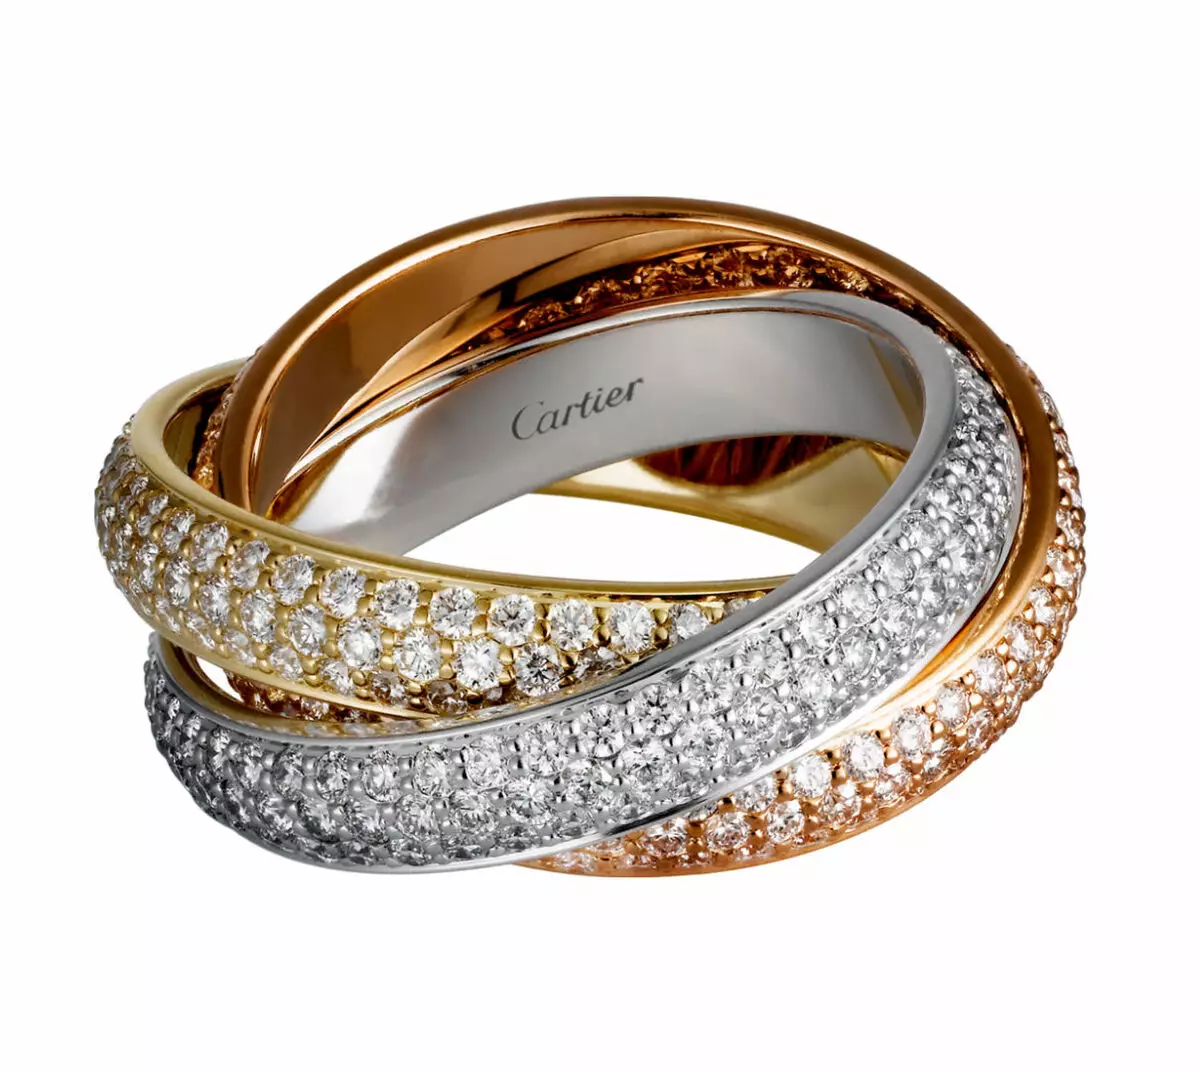 Ring Cartier (115 foto's): Jewelry Geskiedenis en Hersiening van Popular Trinity Models, spyker, Love, Koste 3102_53